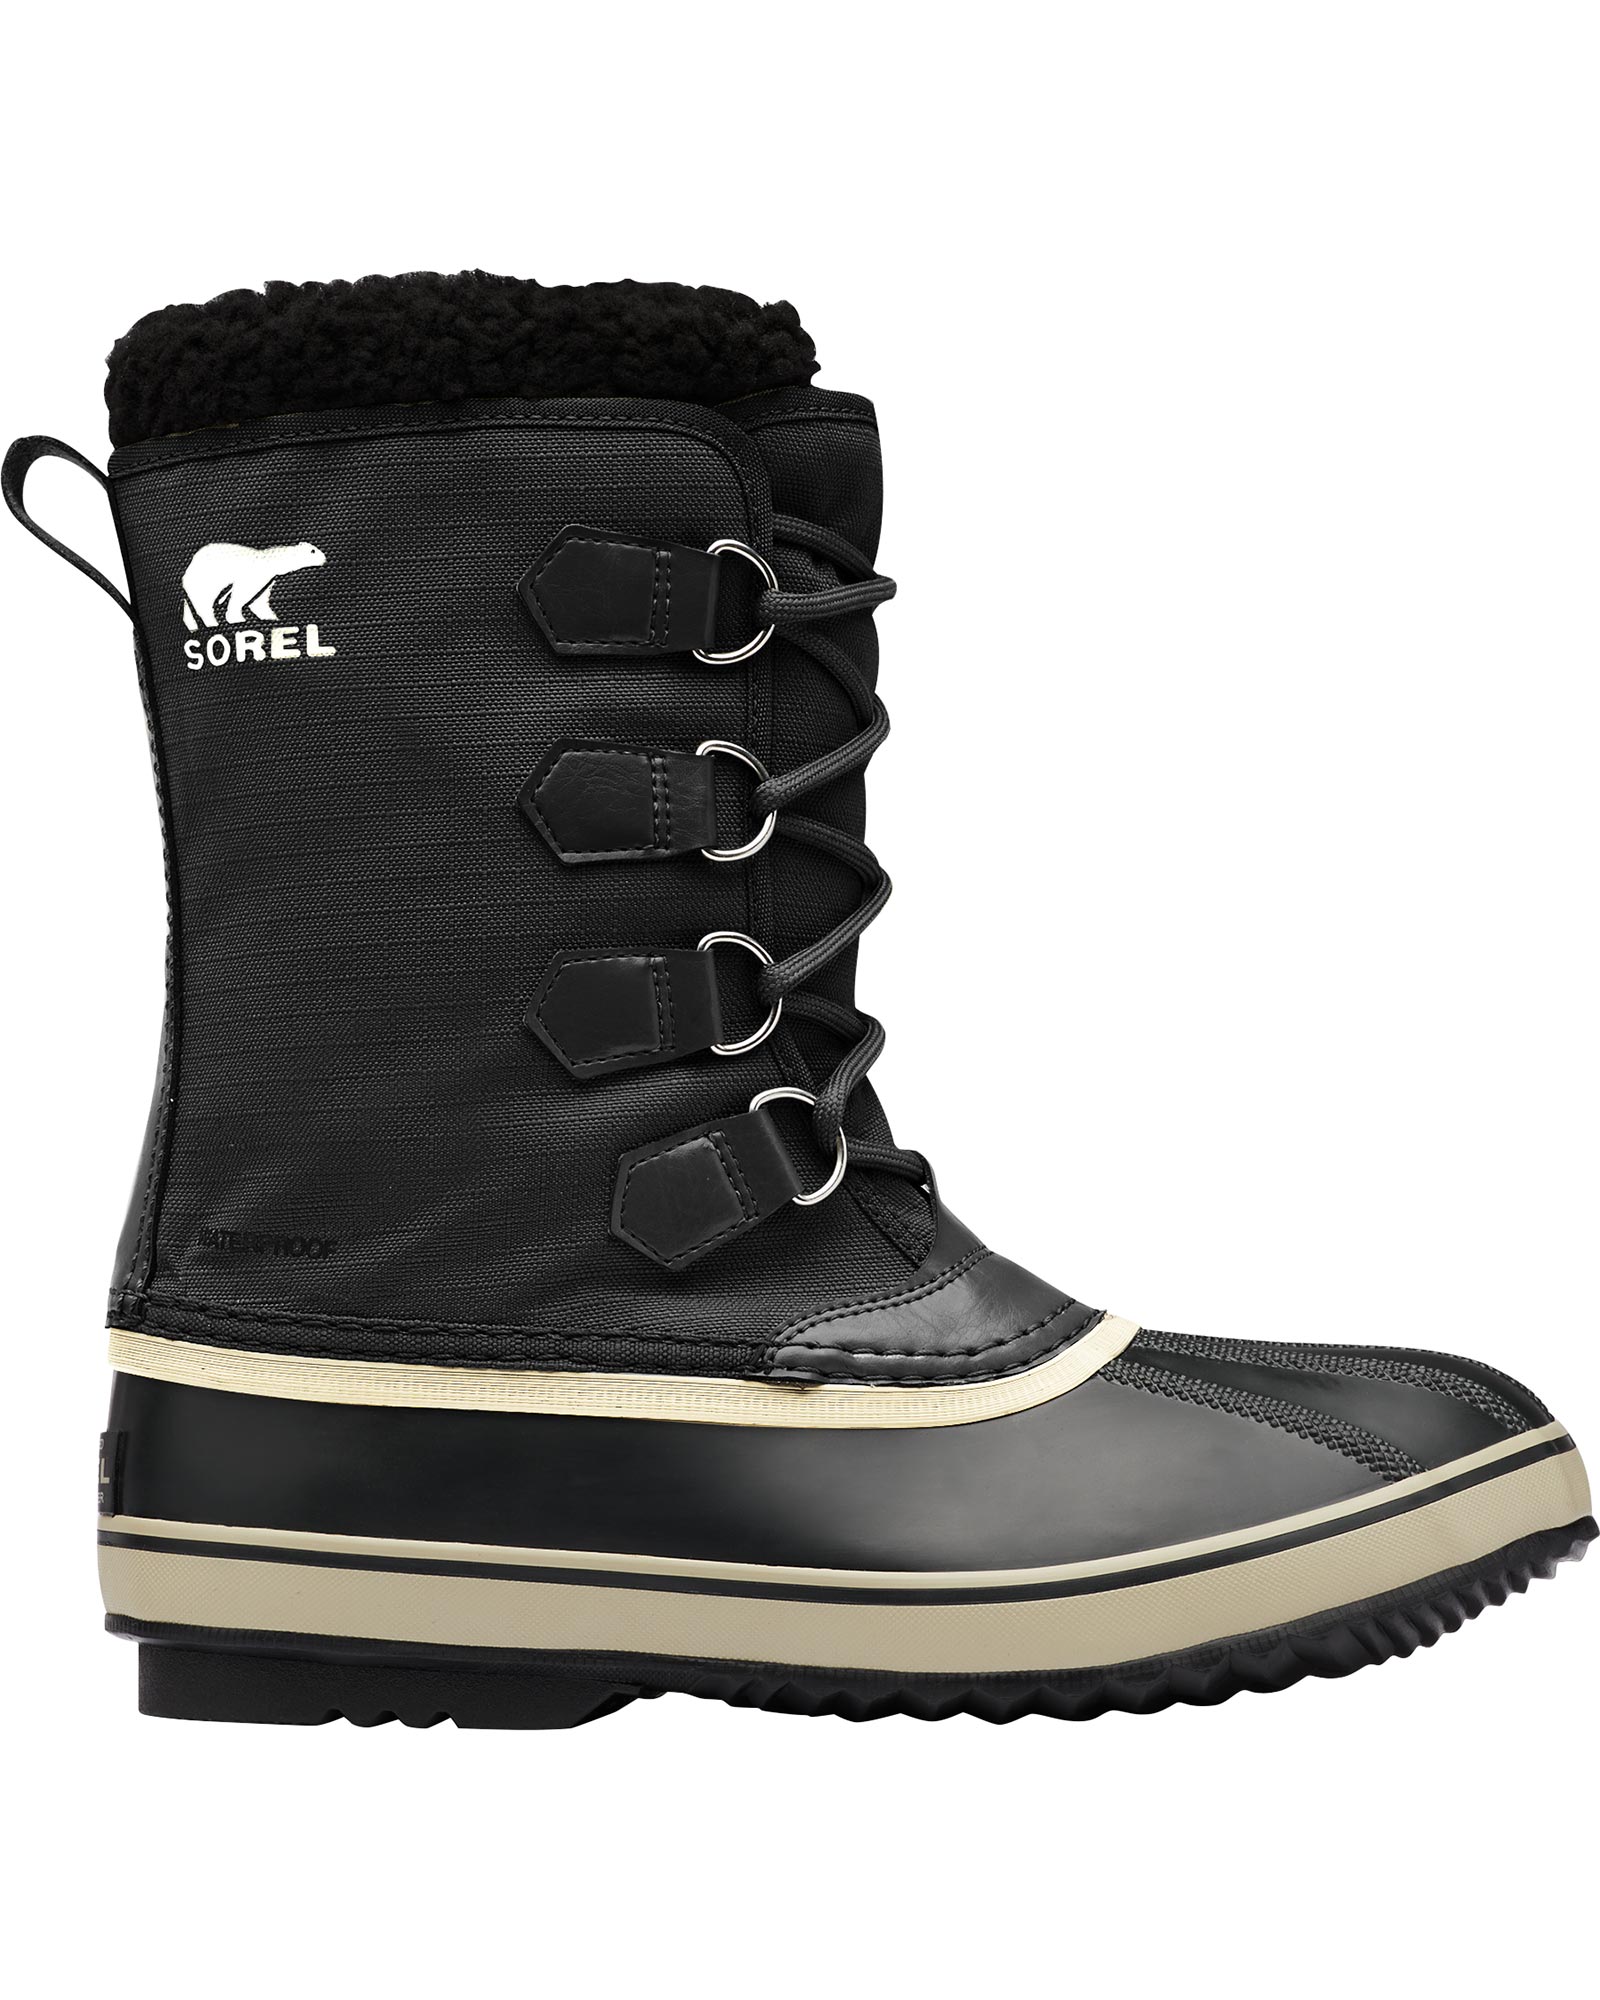 Sorel 1964 Pac Nylon Men’s Snow Boots - black UK 8